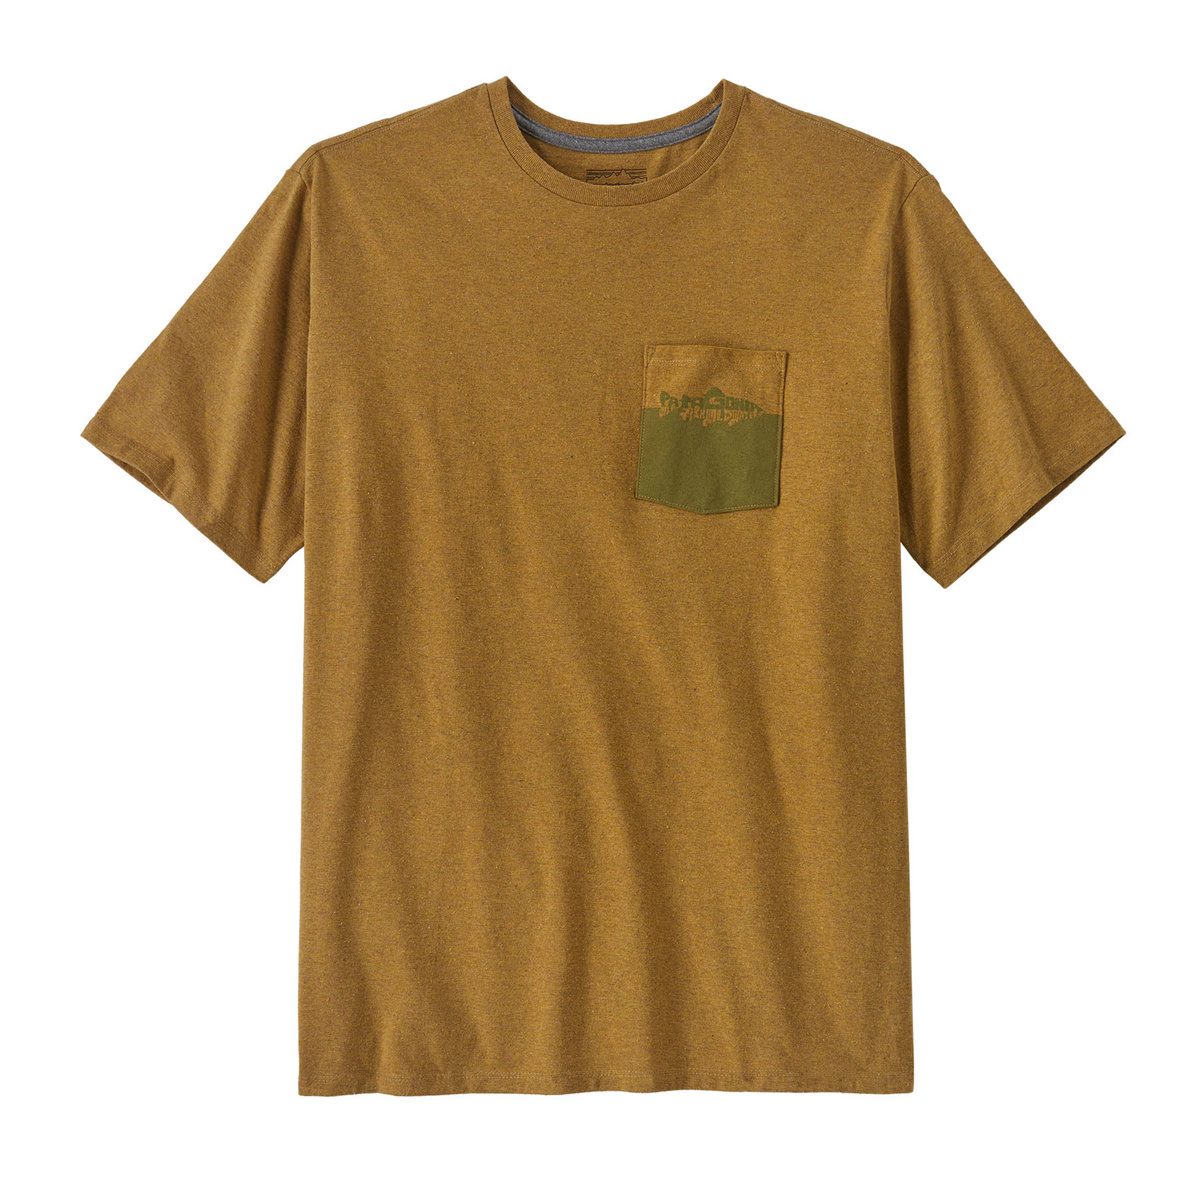 Patagonia Herren Chouinard Crest Pocket T-Shirt von Patagonia